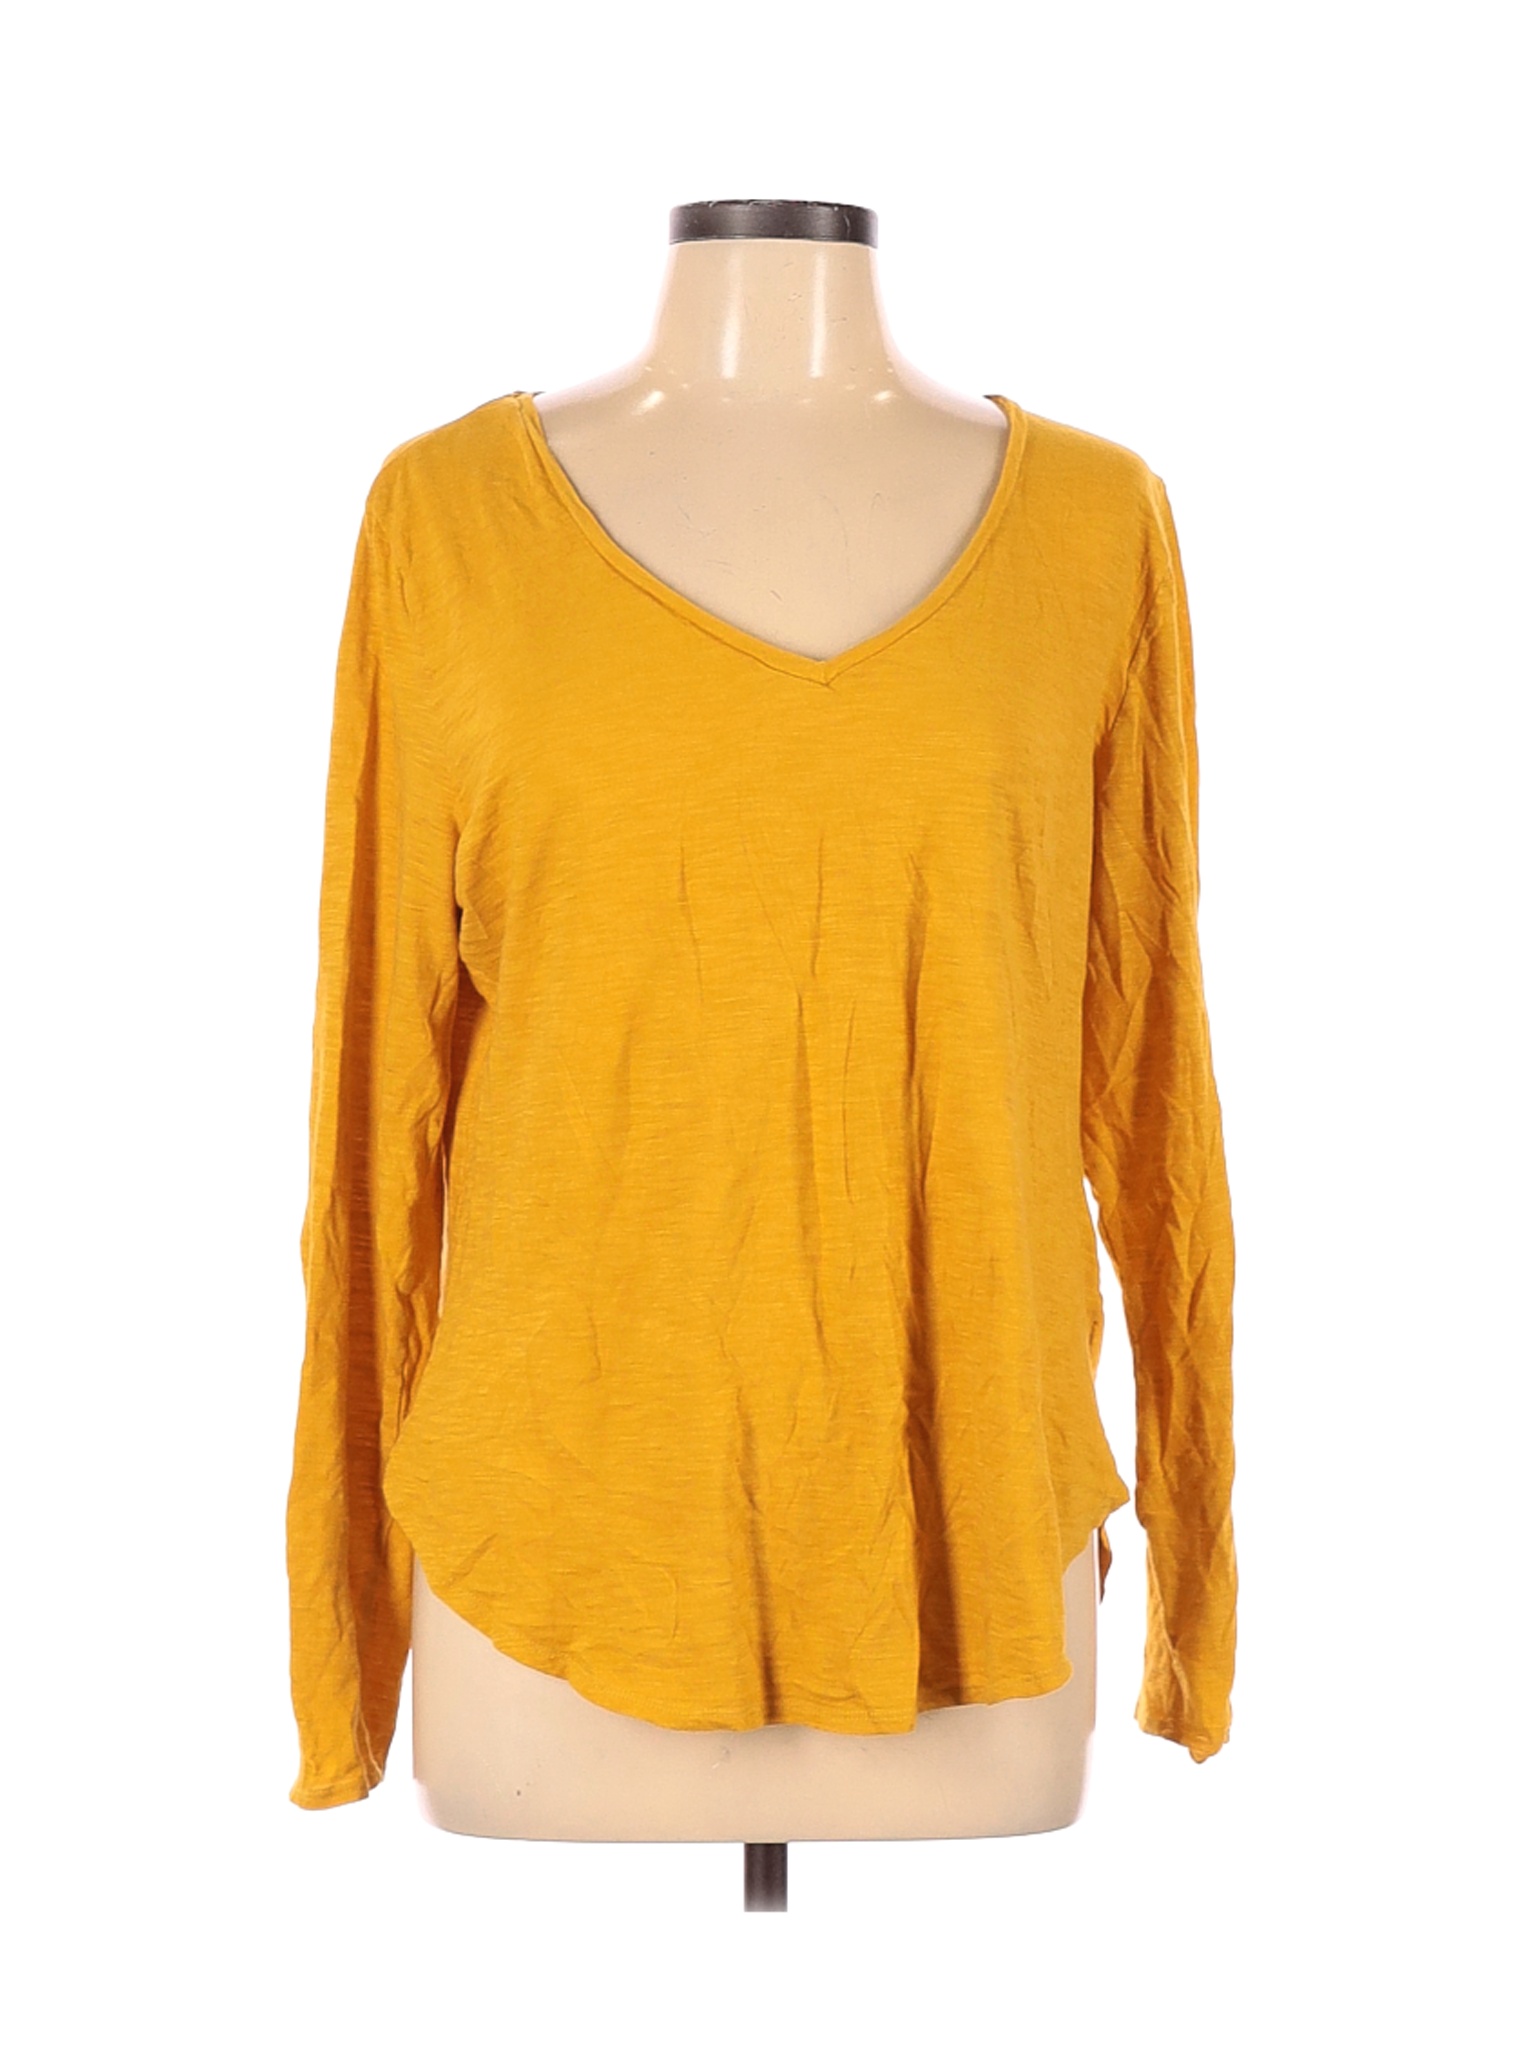 Old Navy Women Yellow Long Sleeve T-Shirt L | eBay